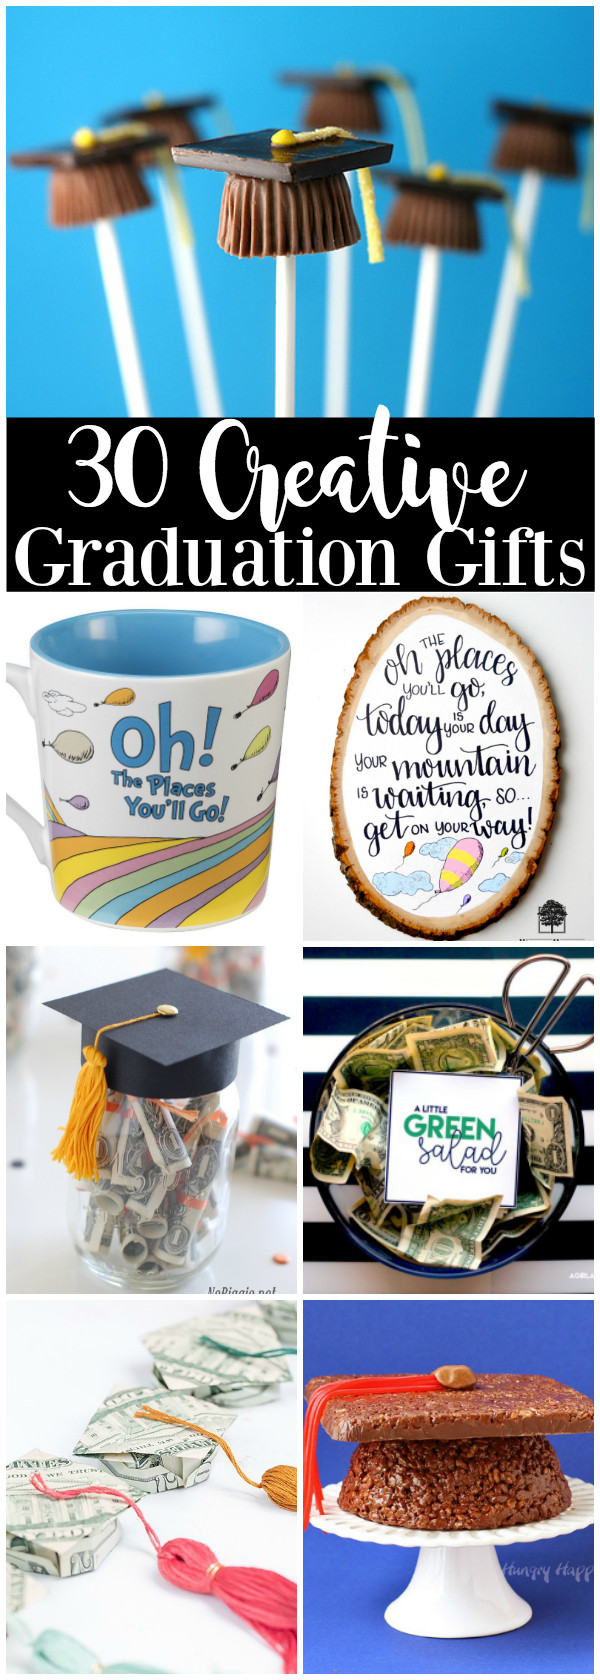 Gift Ideas For Graduation
 30 Creative Graduation Gift Ideas